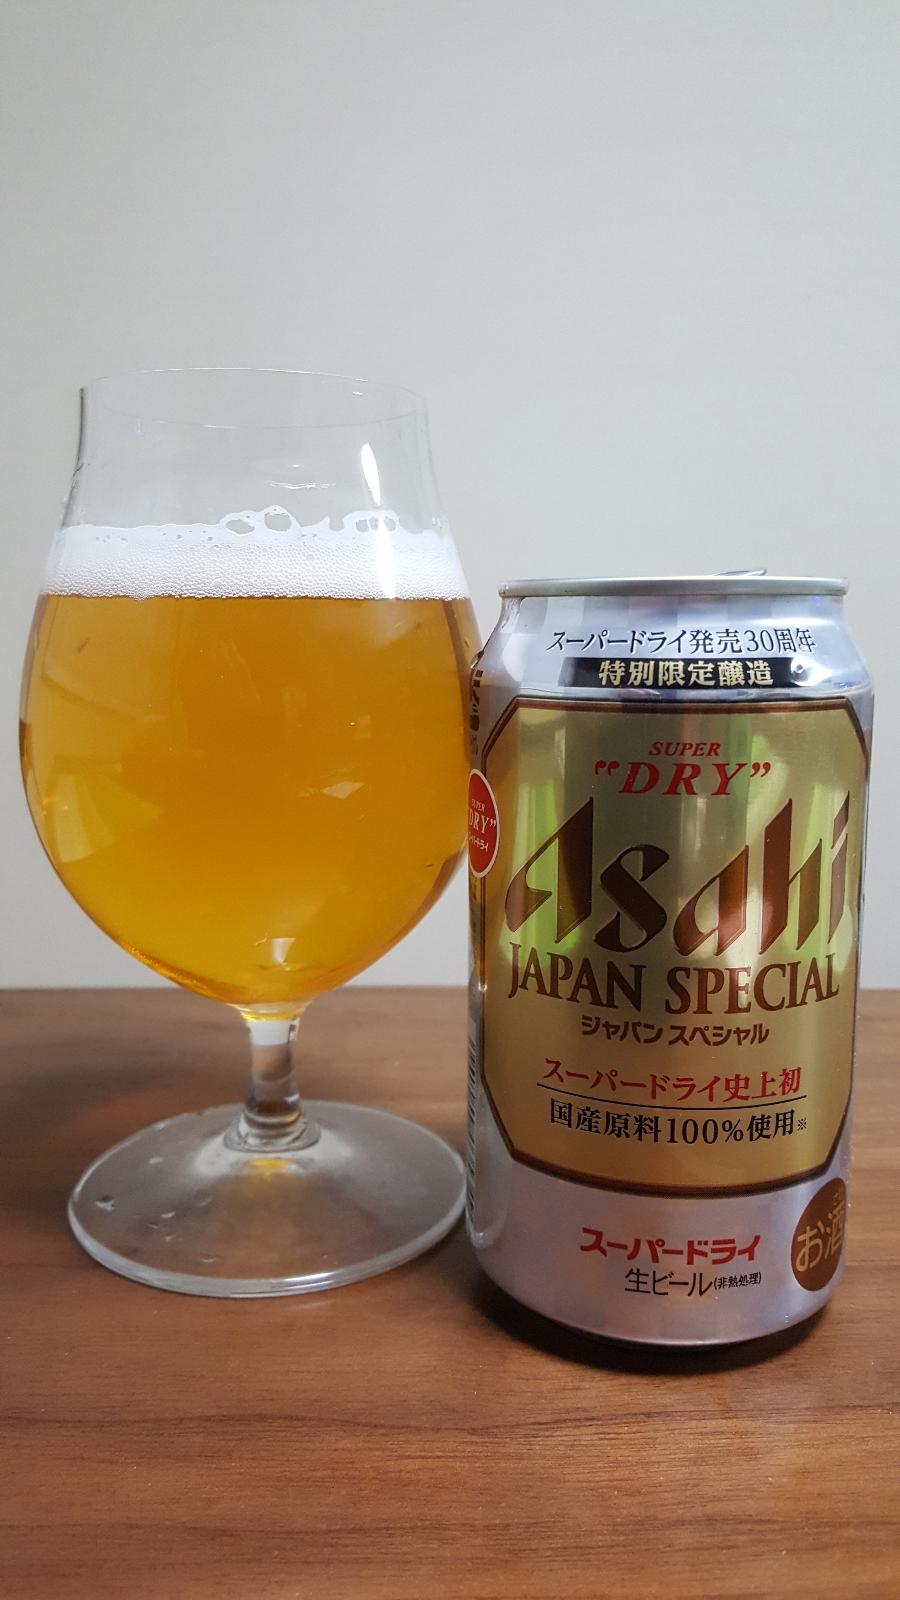 Asahi Super Dry Japan Special (2018)